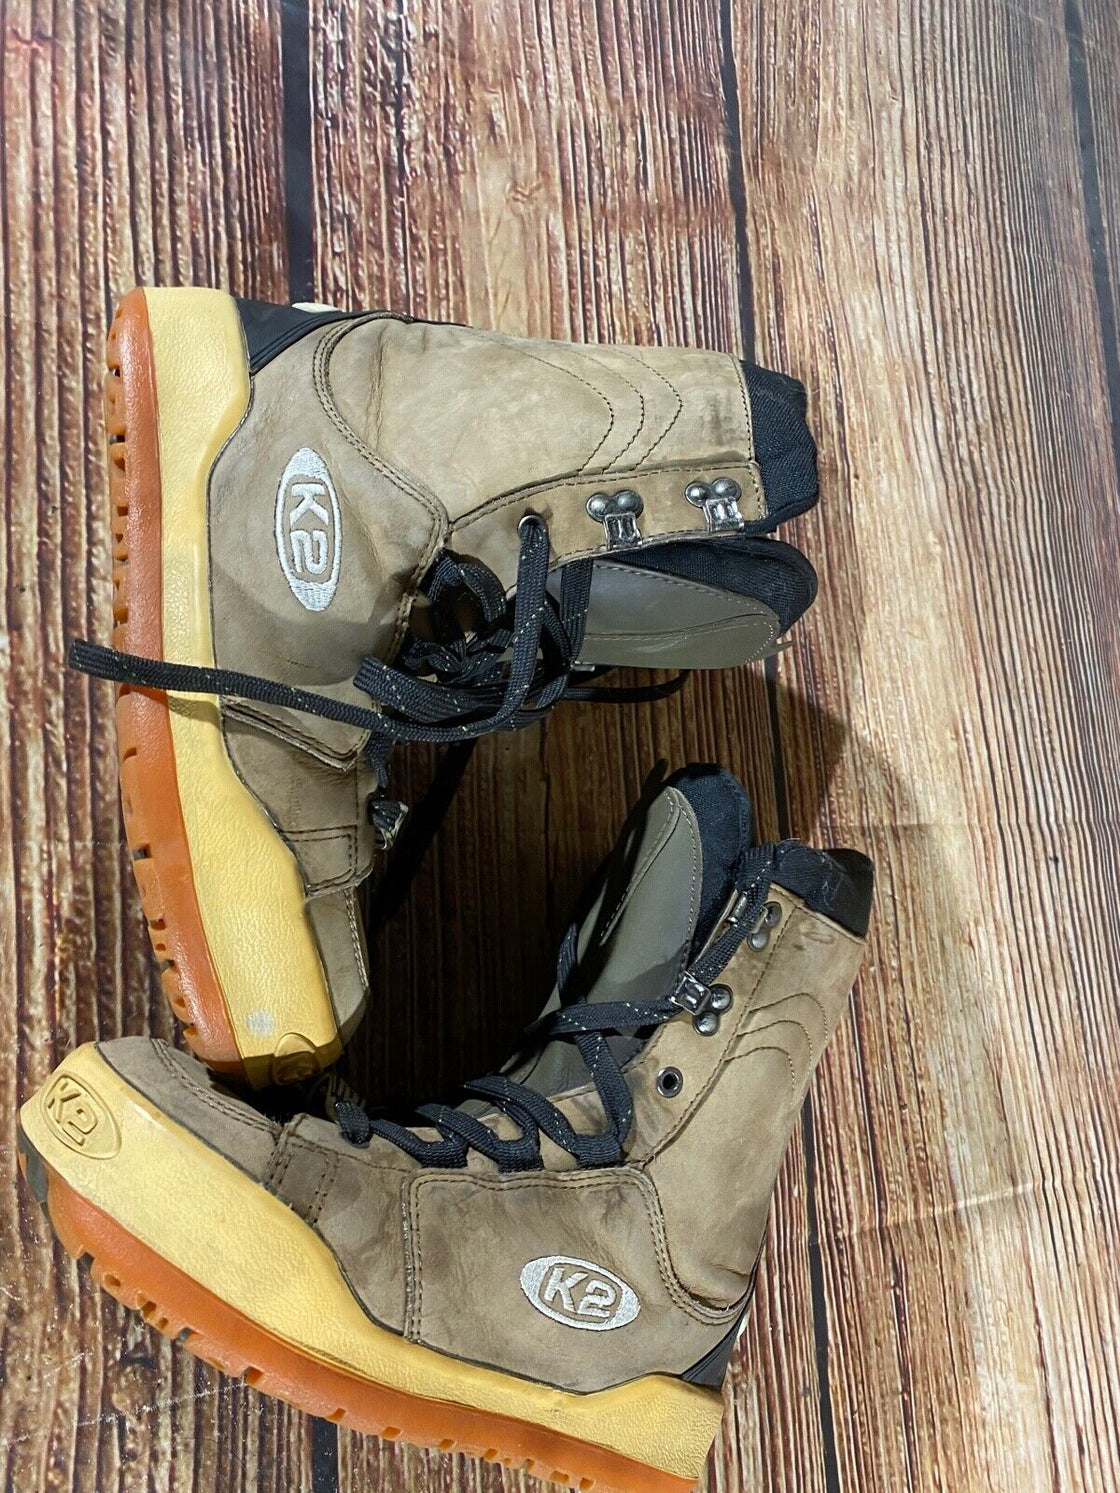 K2 Snowboard Boots Size EU41.5, US8.5, UK7, Mondo 262 mm E